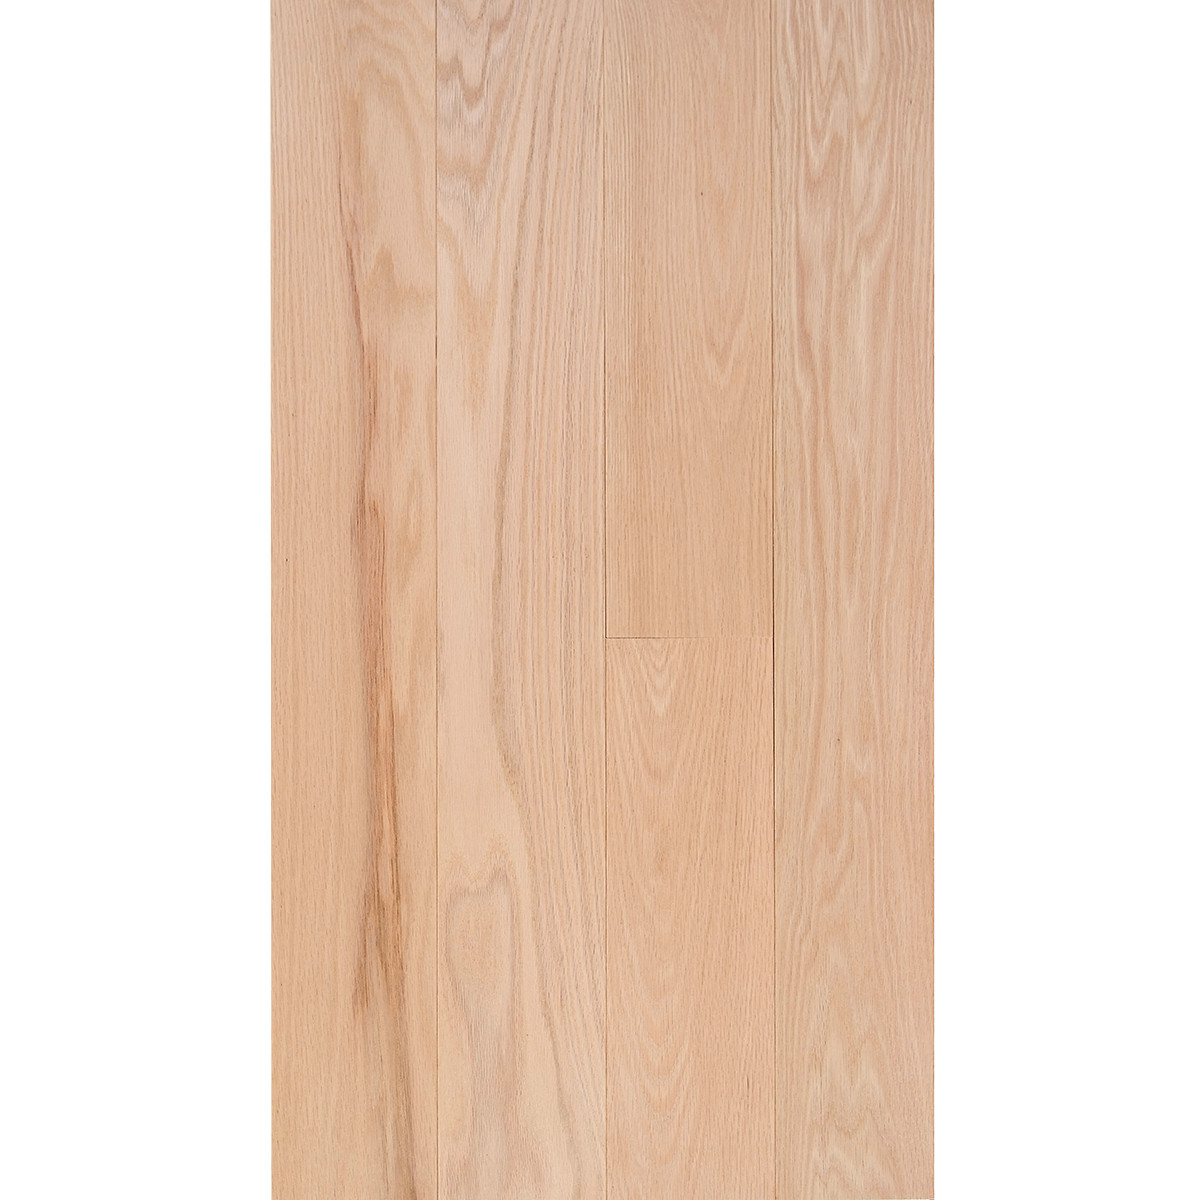 11 Awesome Hardwood Floor Cost Per Sq Foot 2024 free download hardwood floor cost per sq foot of red oak 3 4 x 5 select grade flooring with regard to fs 5 redoak select em flooring